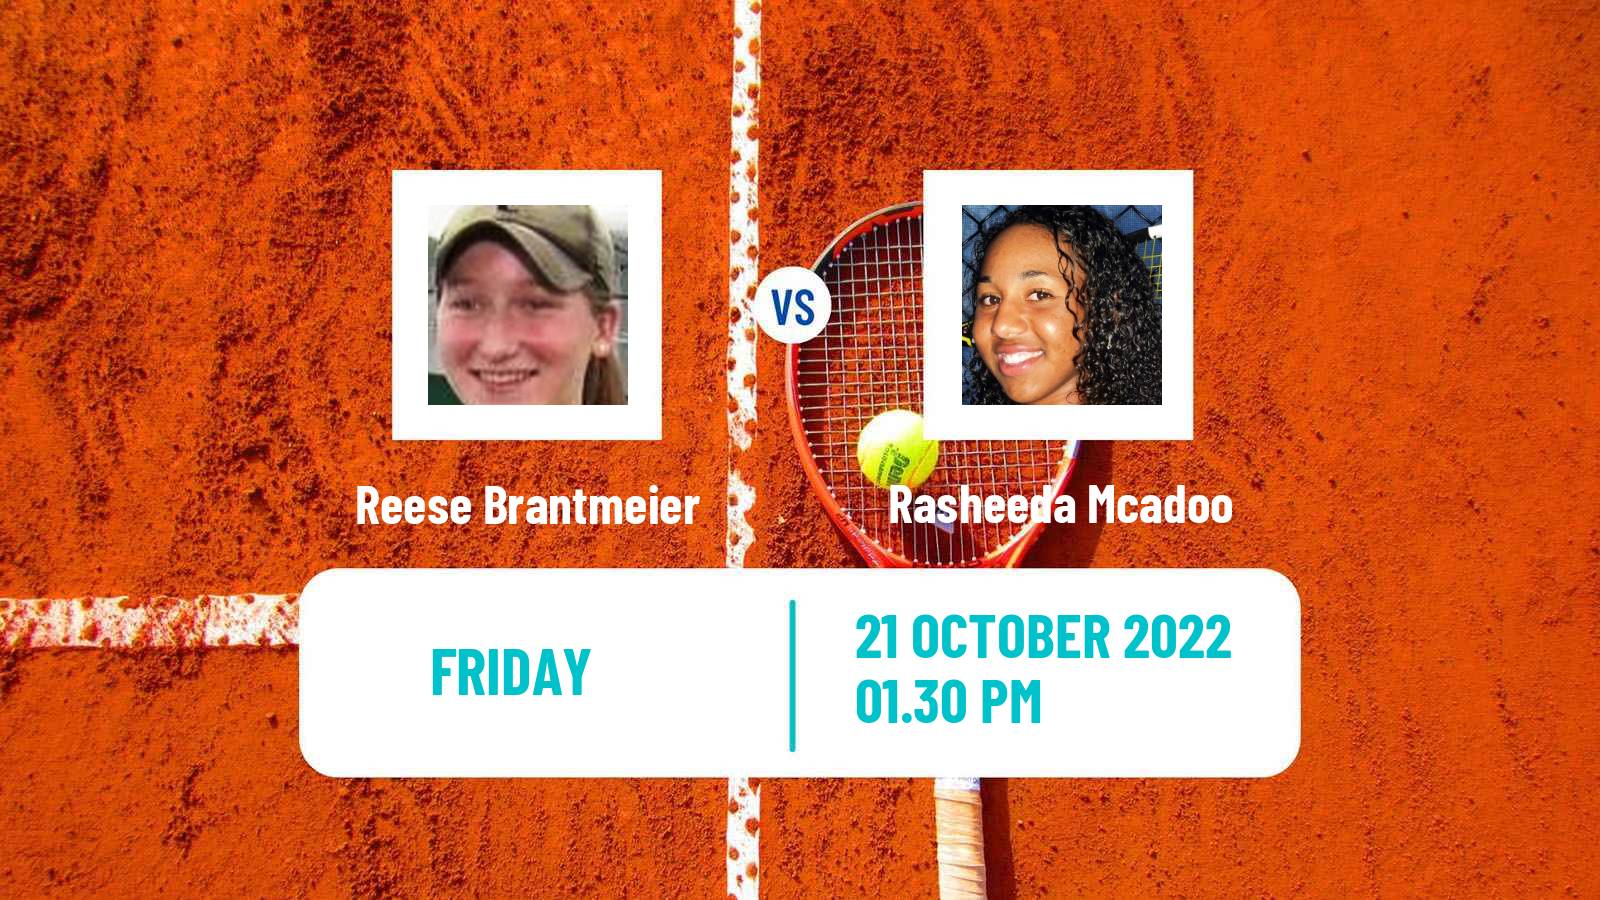 Tennis ITF Tournaments Reese Brantmeier - Rasheeda Mcadoo